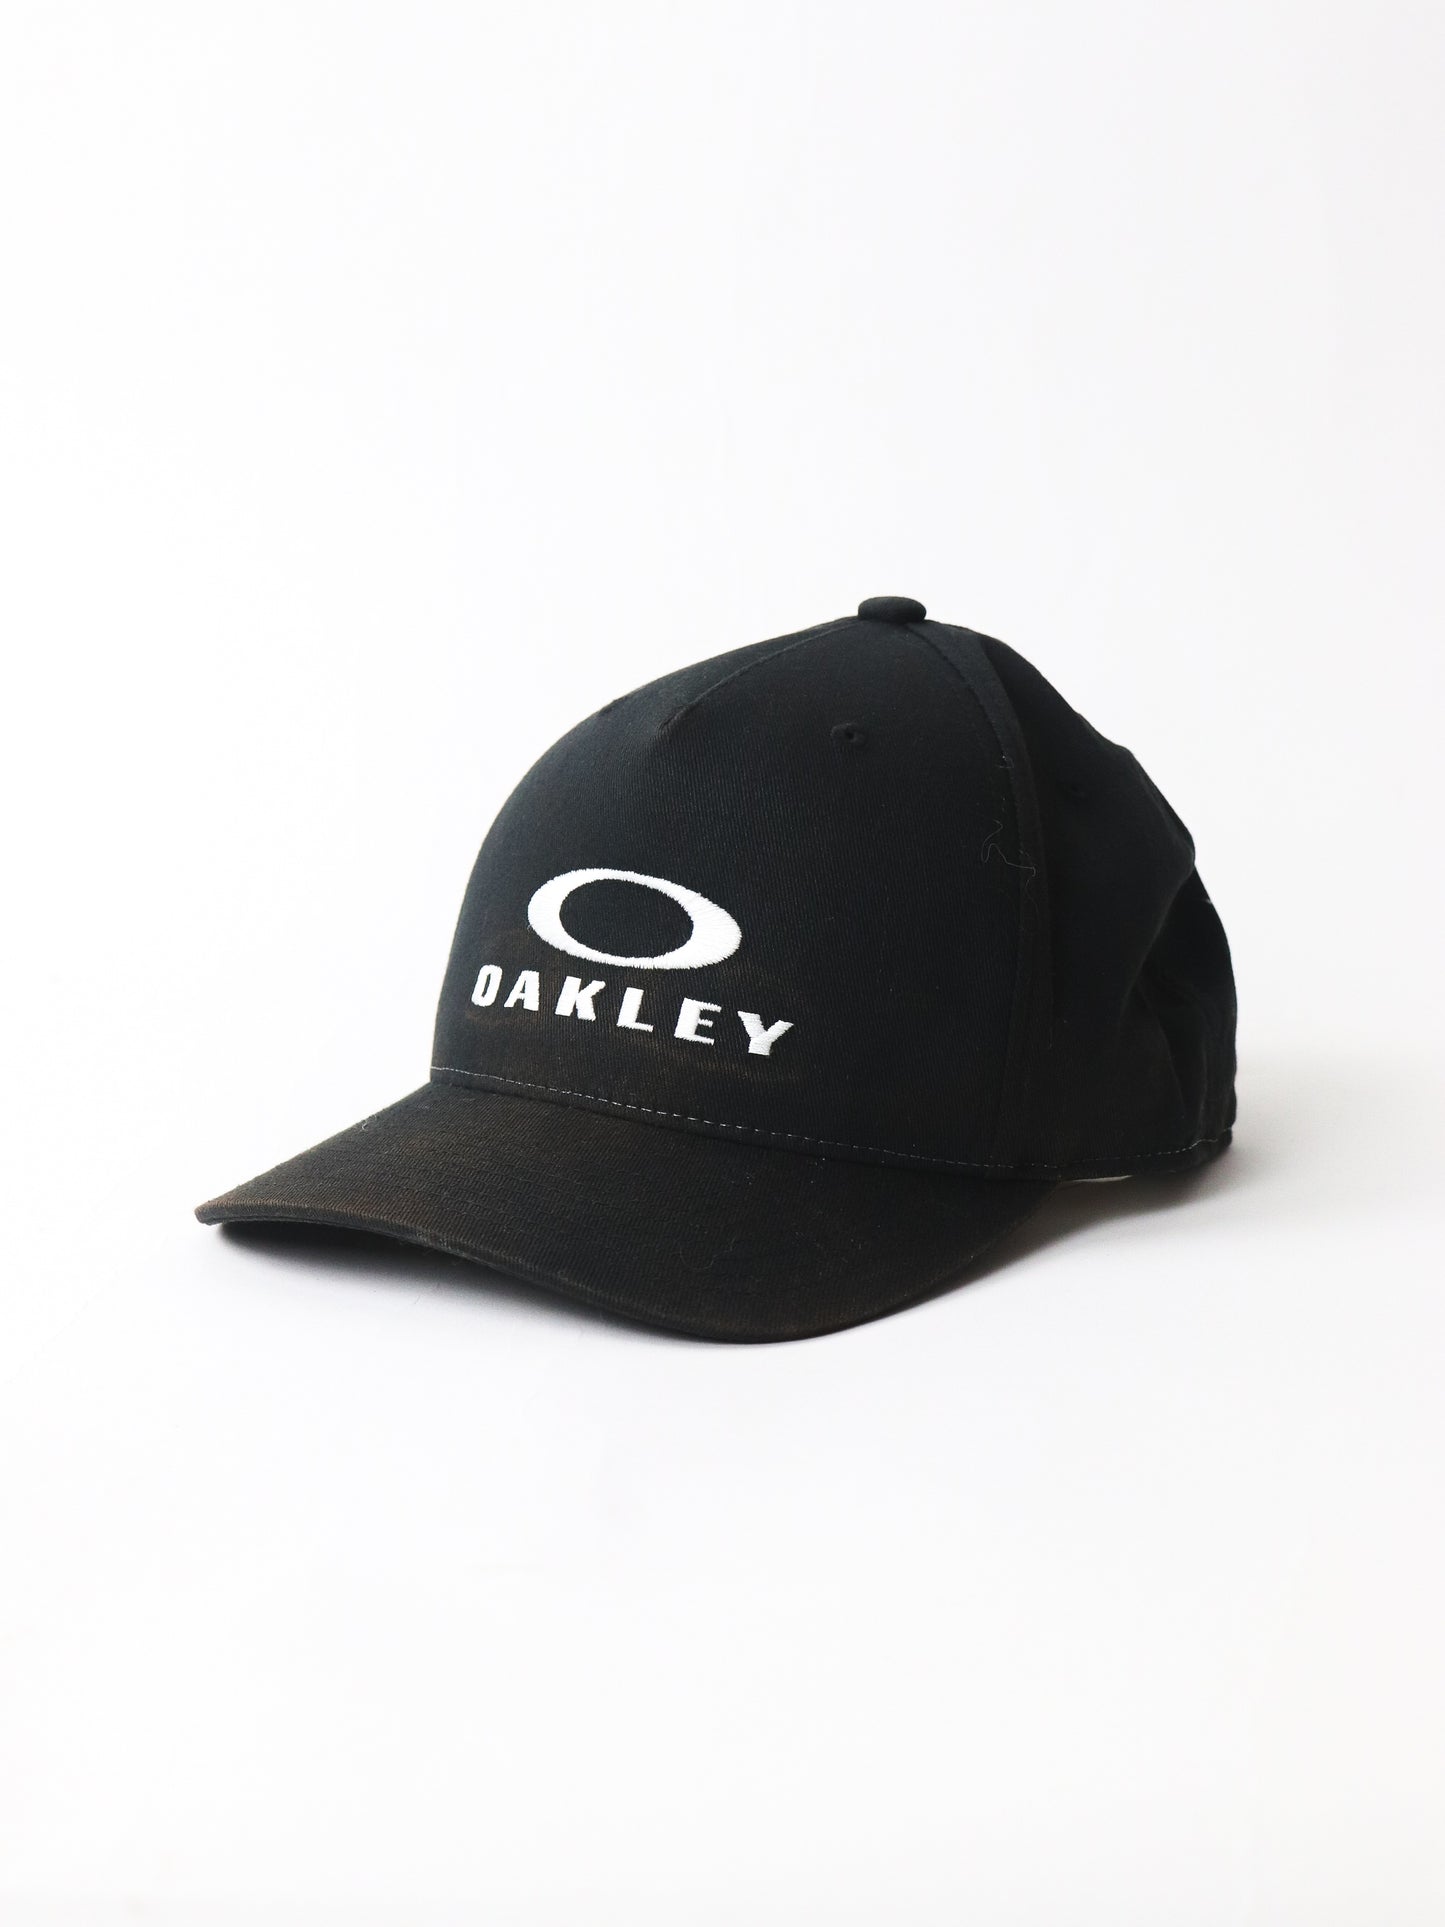 Oakley Hat Cap Adult Black Snap Back